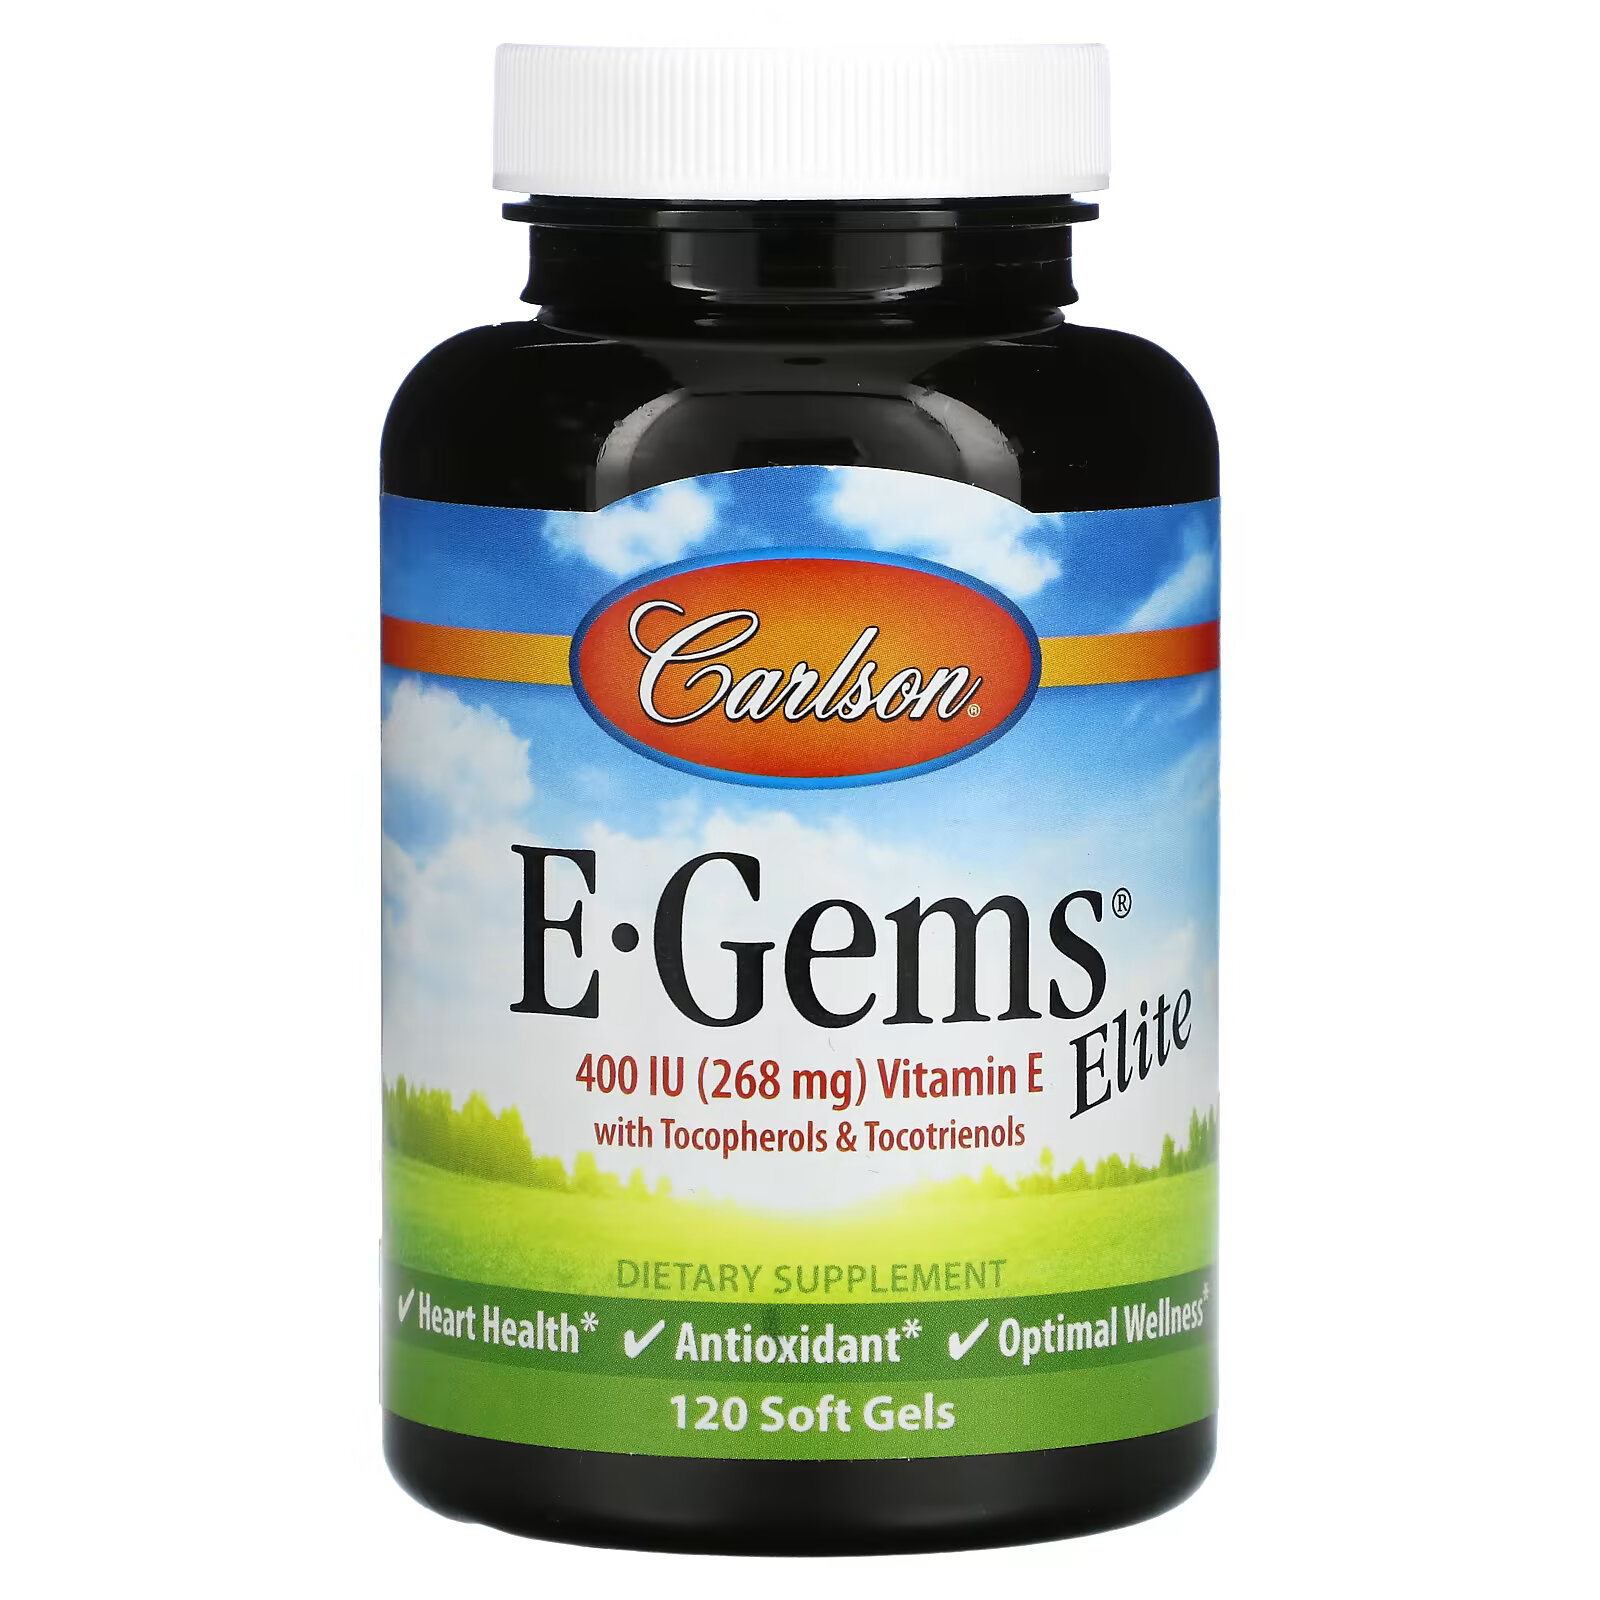 Carlson, E-Gems Elite, витамин E, 268 мг (400 МЕ), 120 мягких таблеток natural factors смешанный витамин e 268 мг 400 ме 90 мягких таблеток